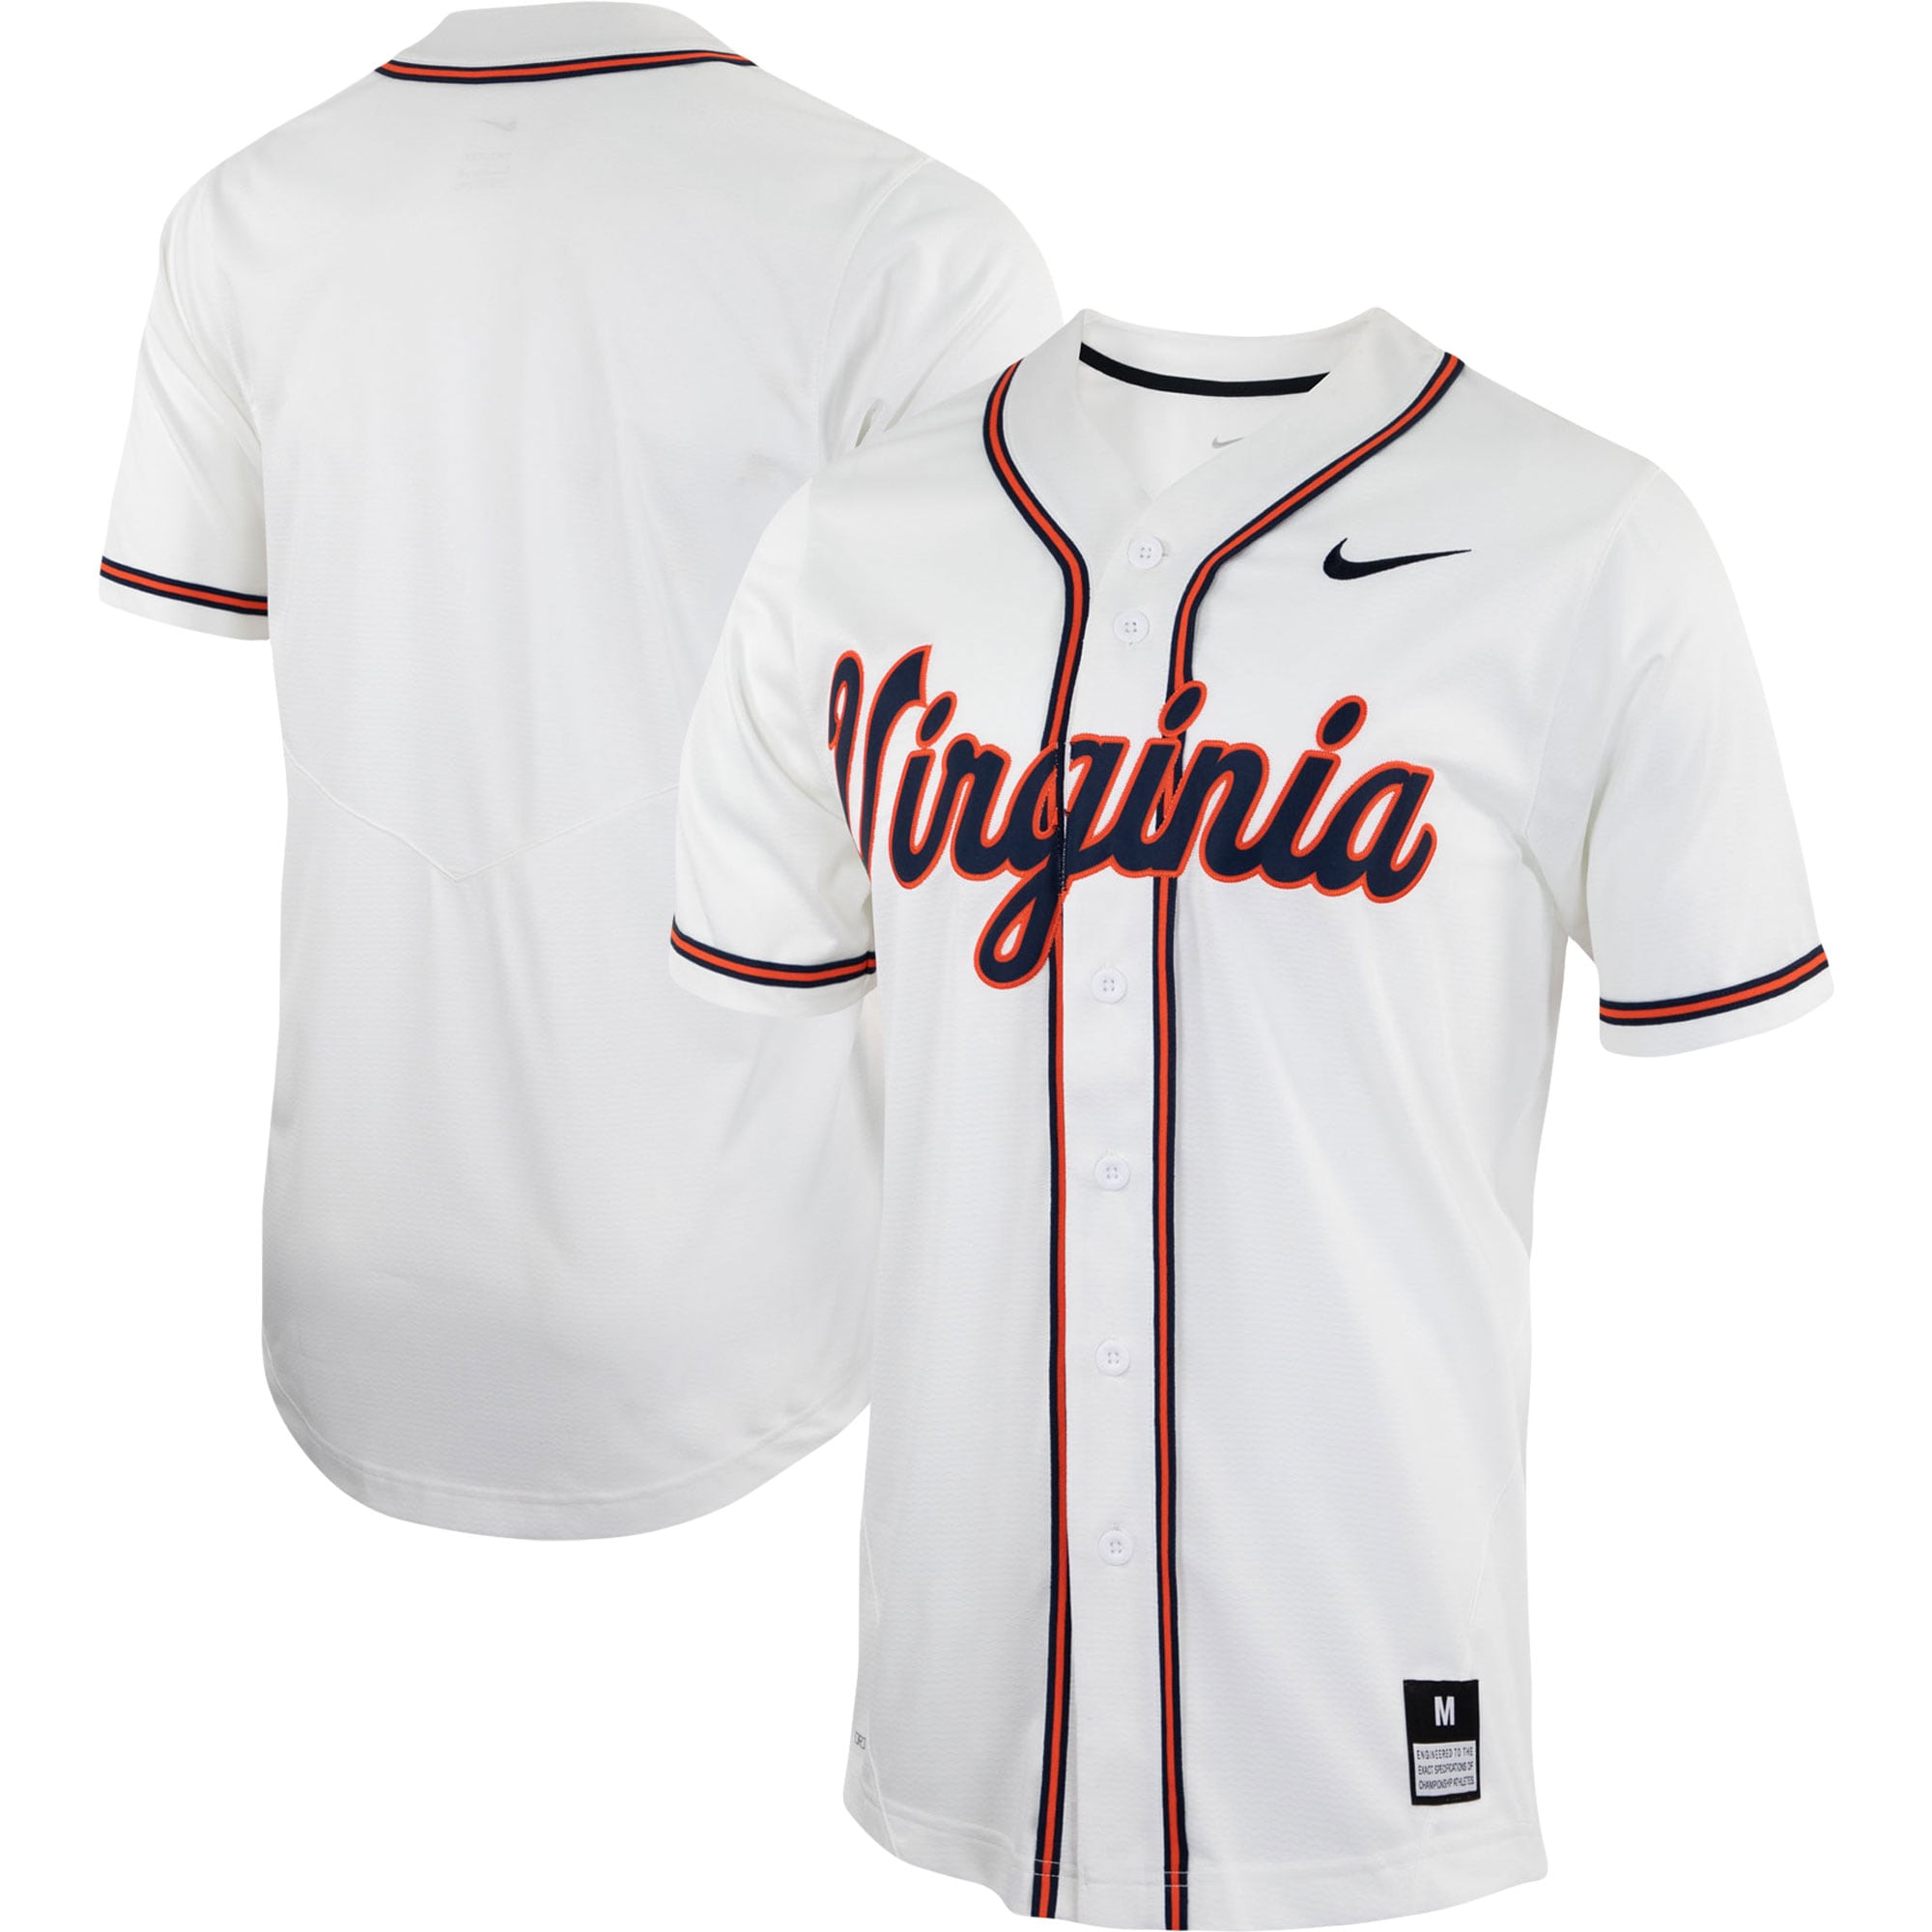 Virginia Cavaliers Replica Baseball Jersey - White For Youth Women Men